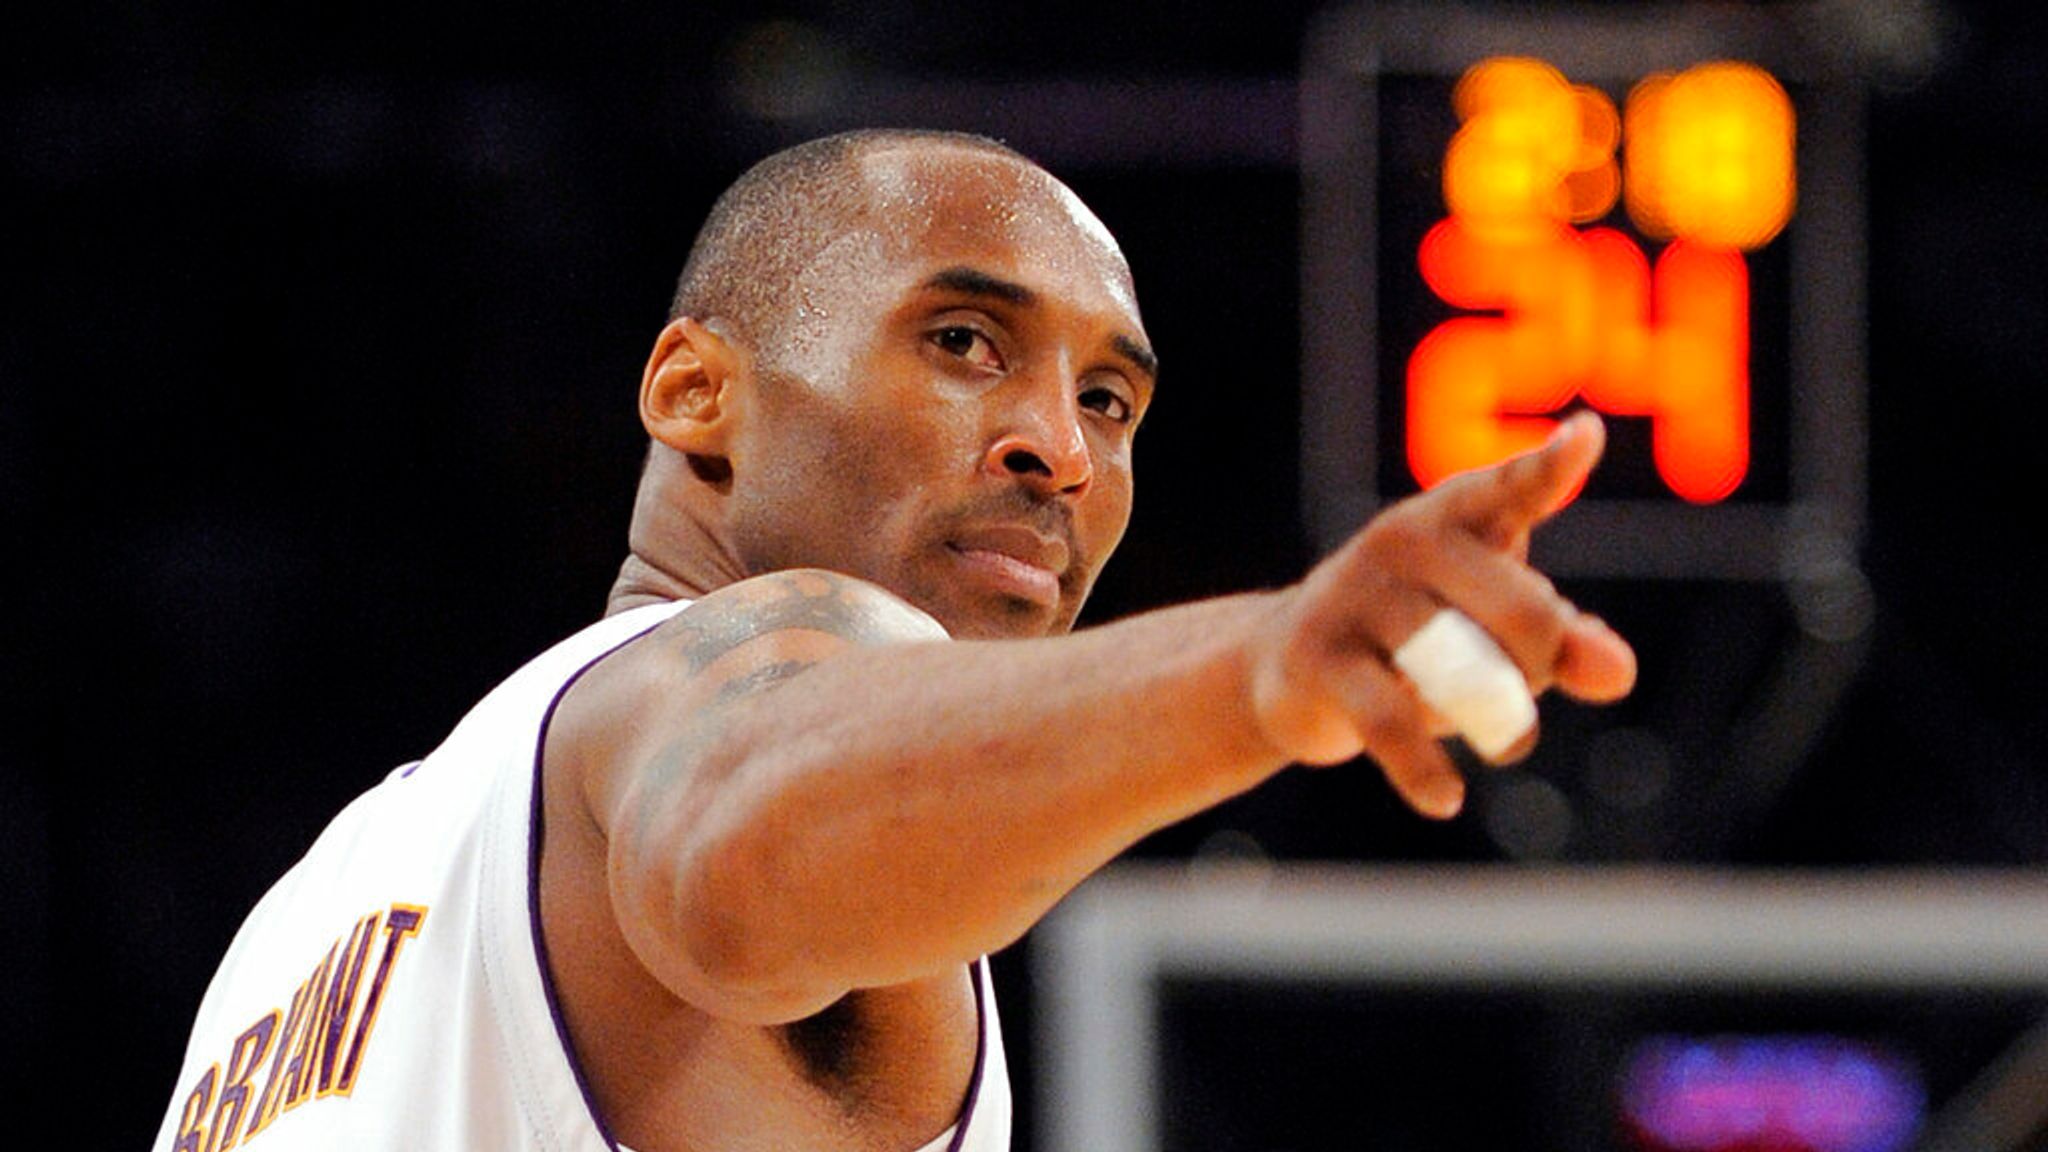 Kobe Bryant Los Angeles Lakers adidas Black Mamba Nickname and